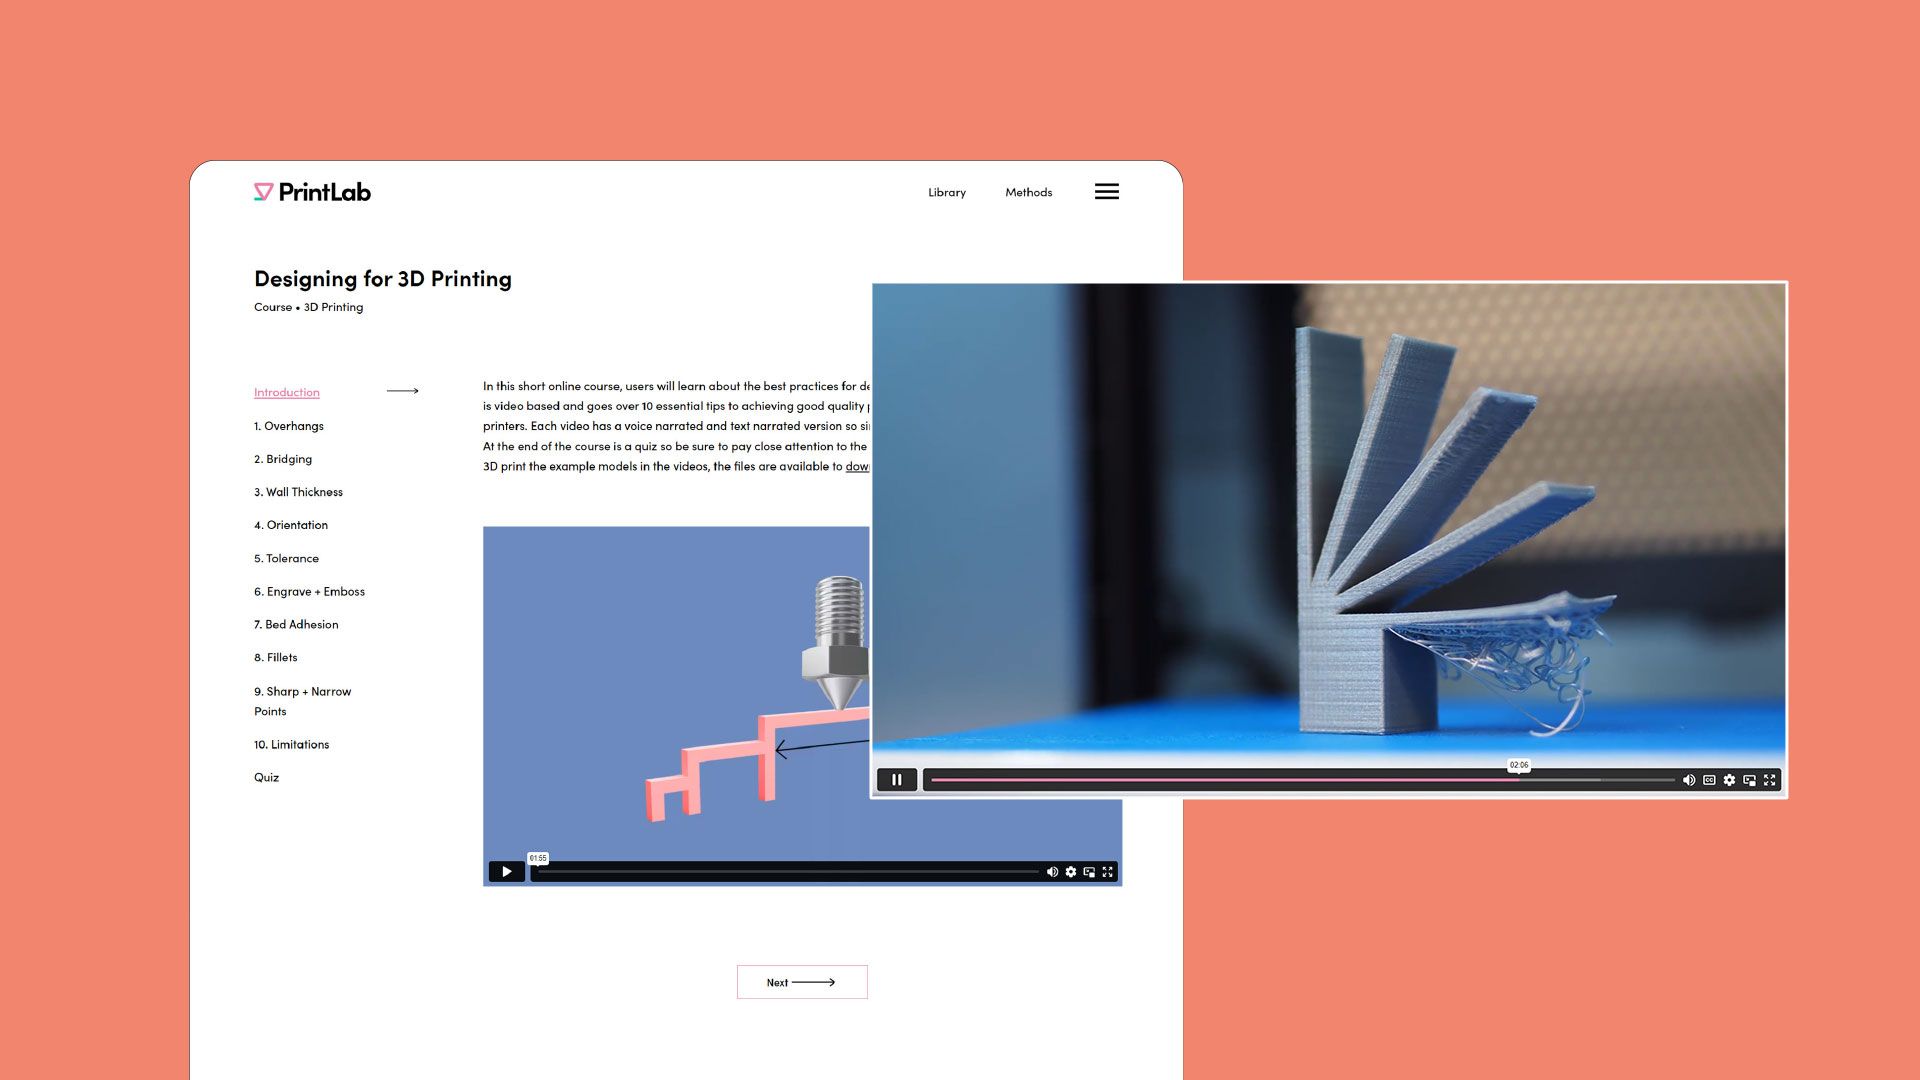 A website screen showing PrintLab's 'Designing for 3D Printing' learning platform.